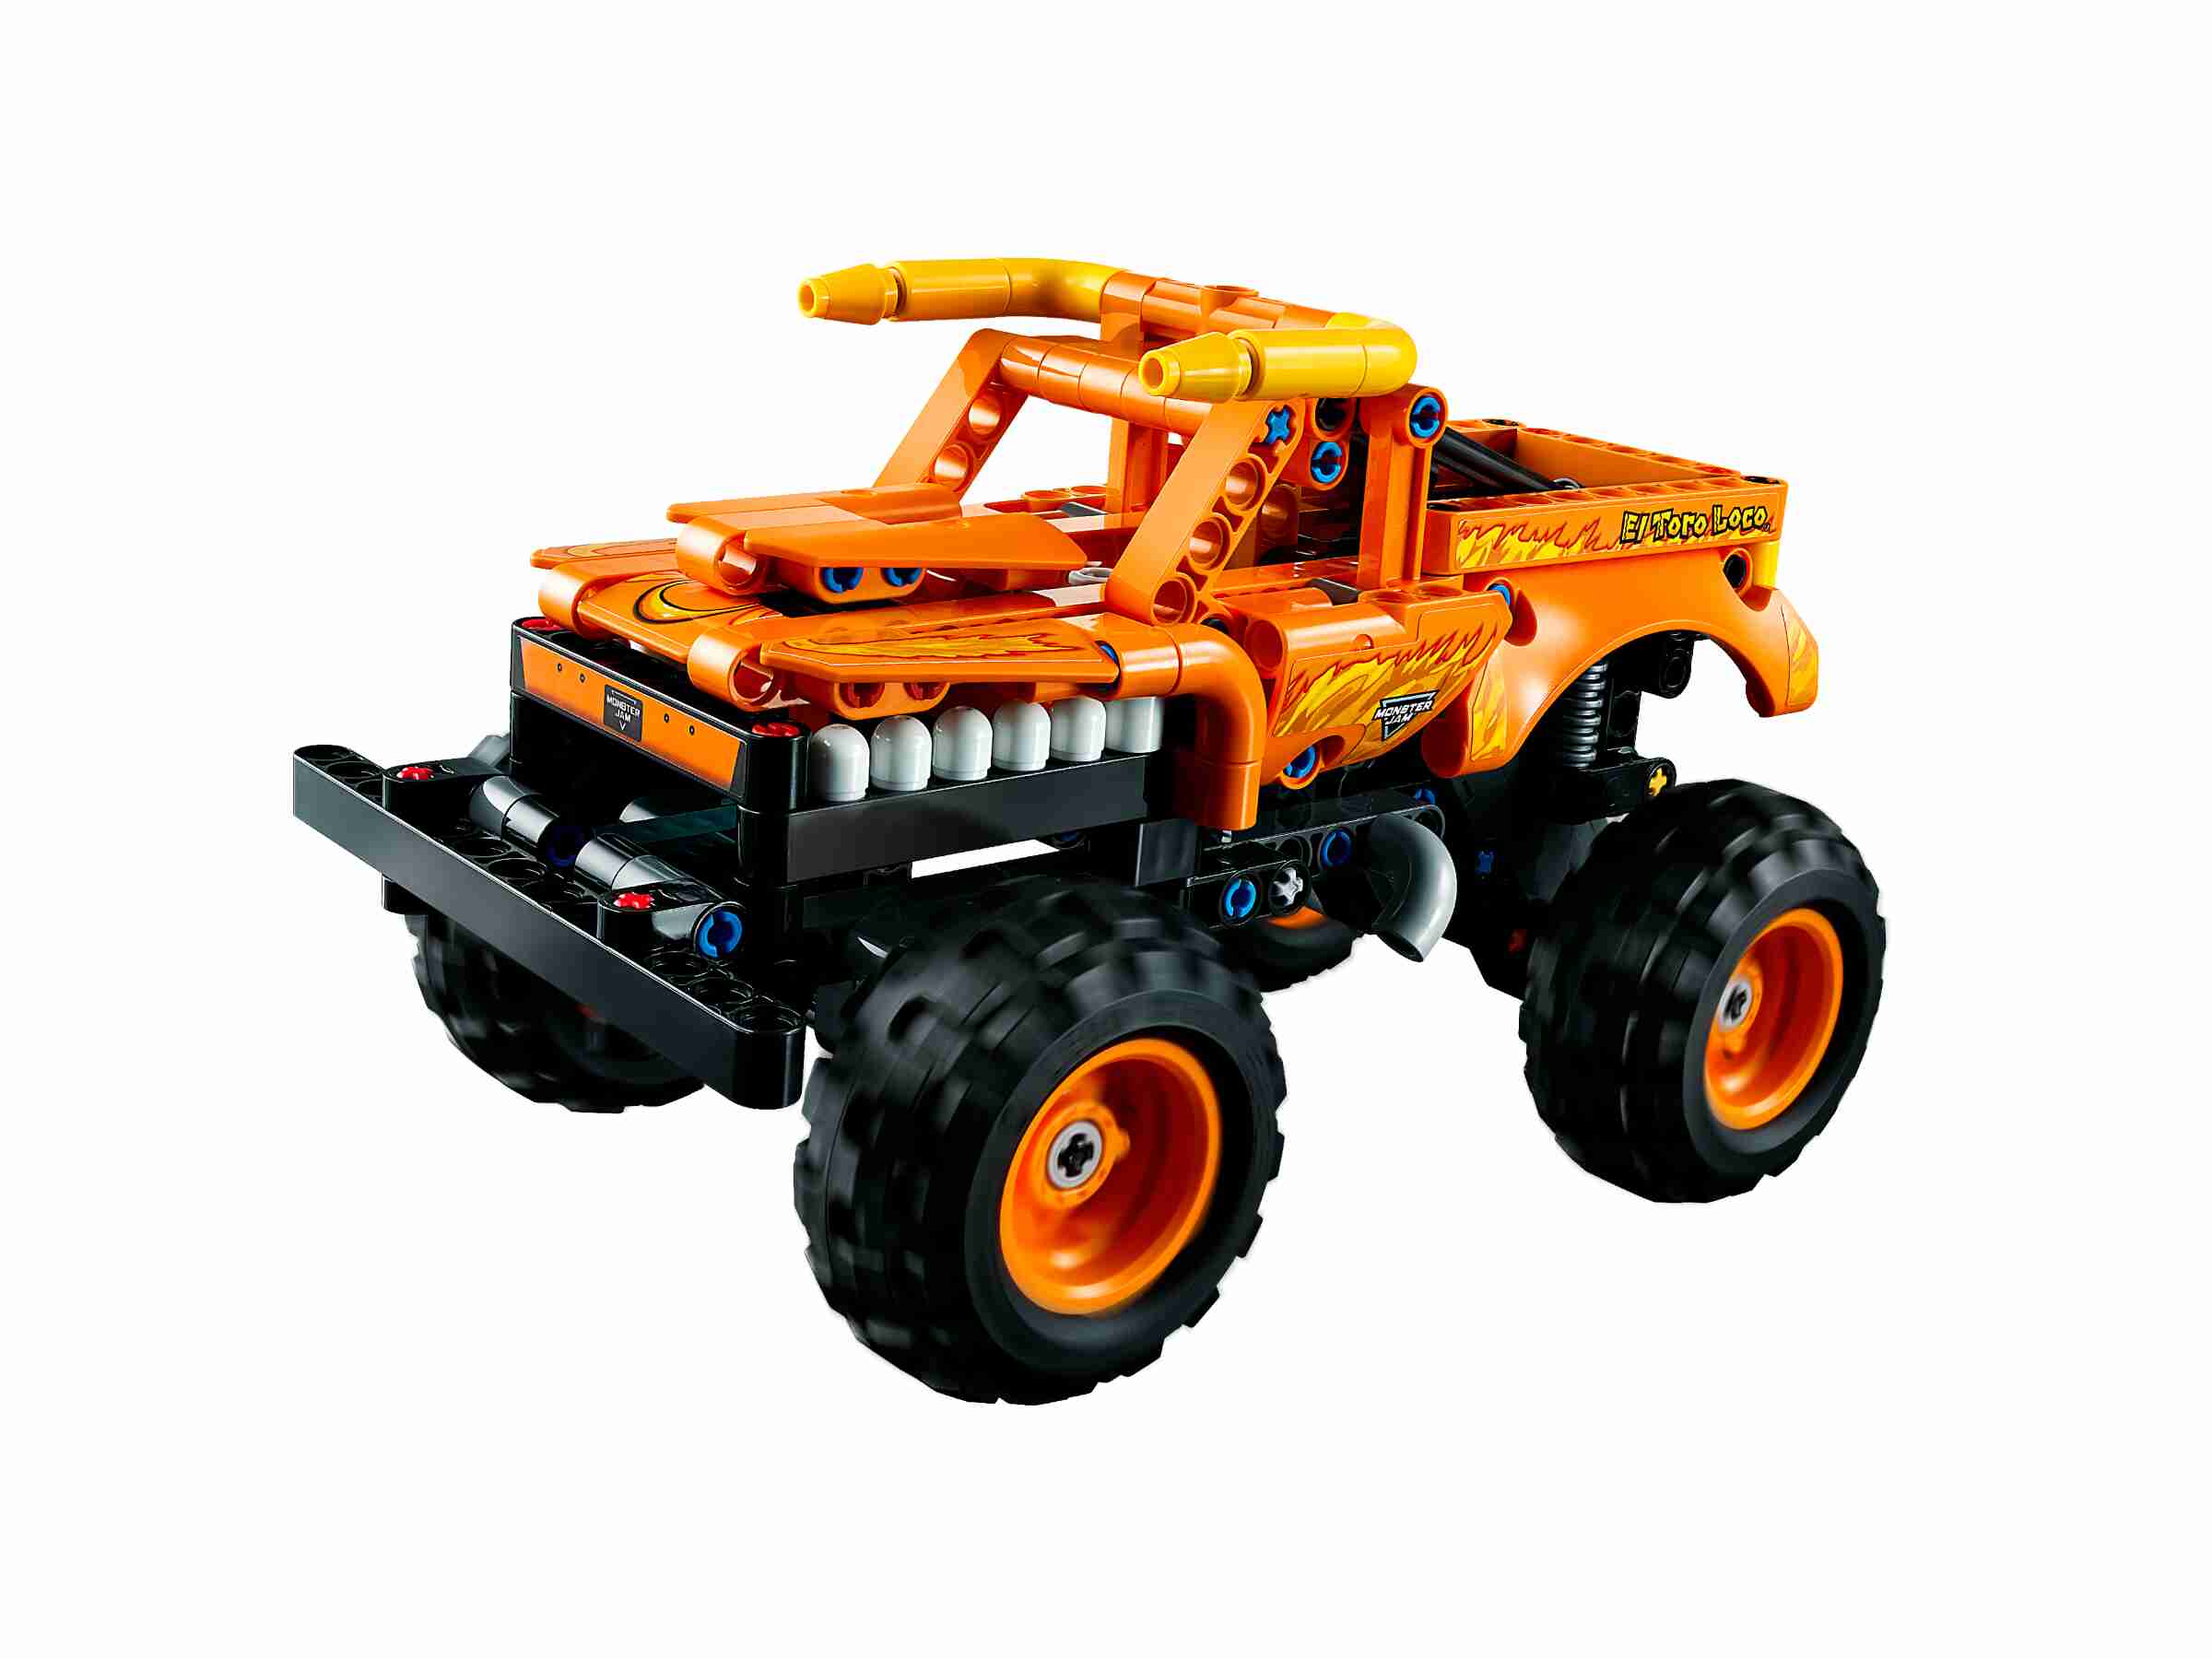 LEGO 42135 Technic Monster Jam EL Toro Loco, Monster Truck mit Rückziehmotor